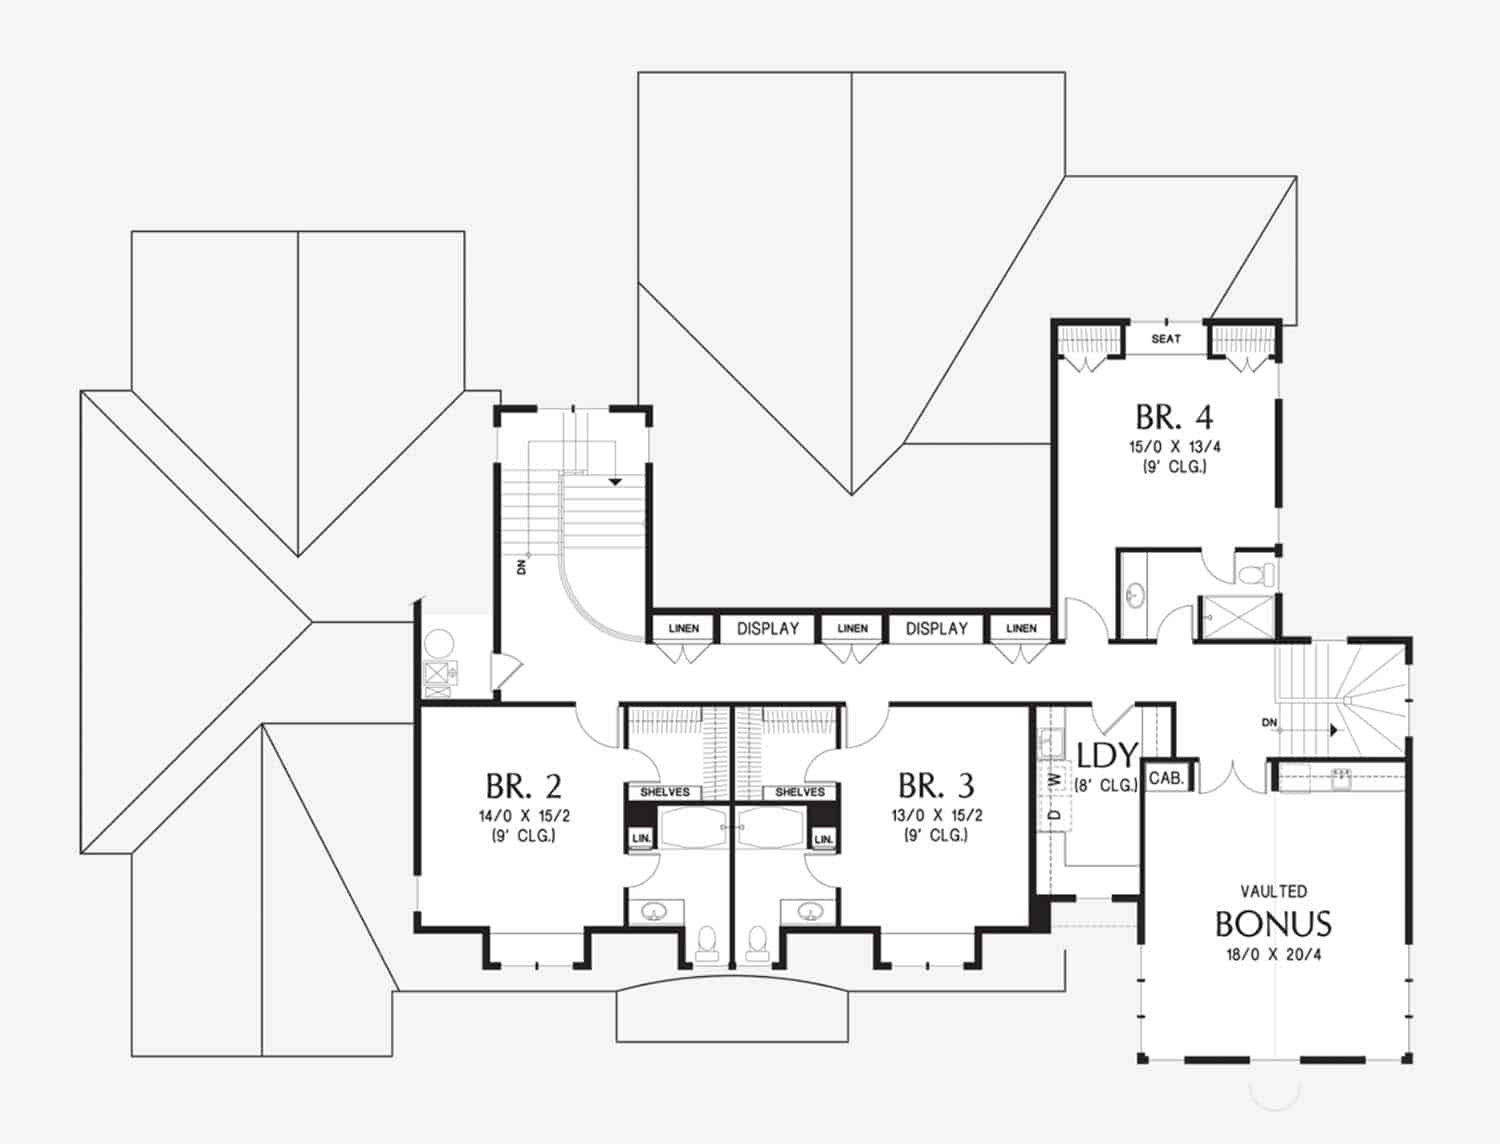 cape cod style dream home upper level floor plan